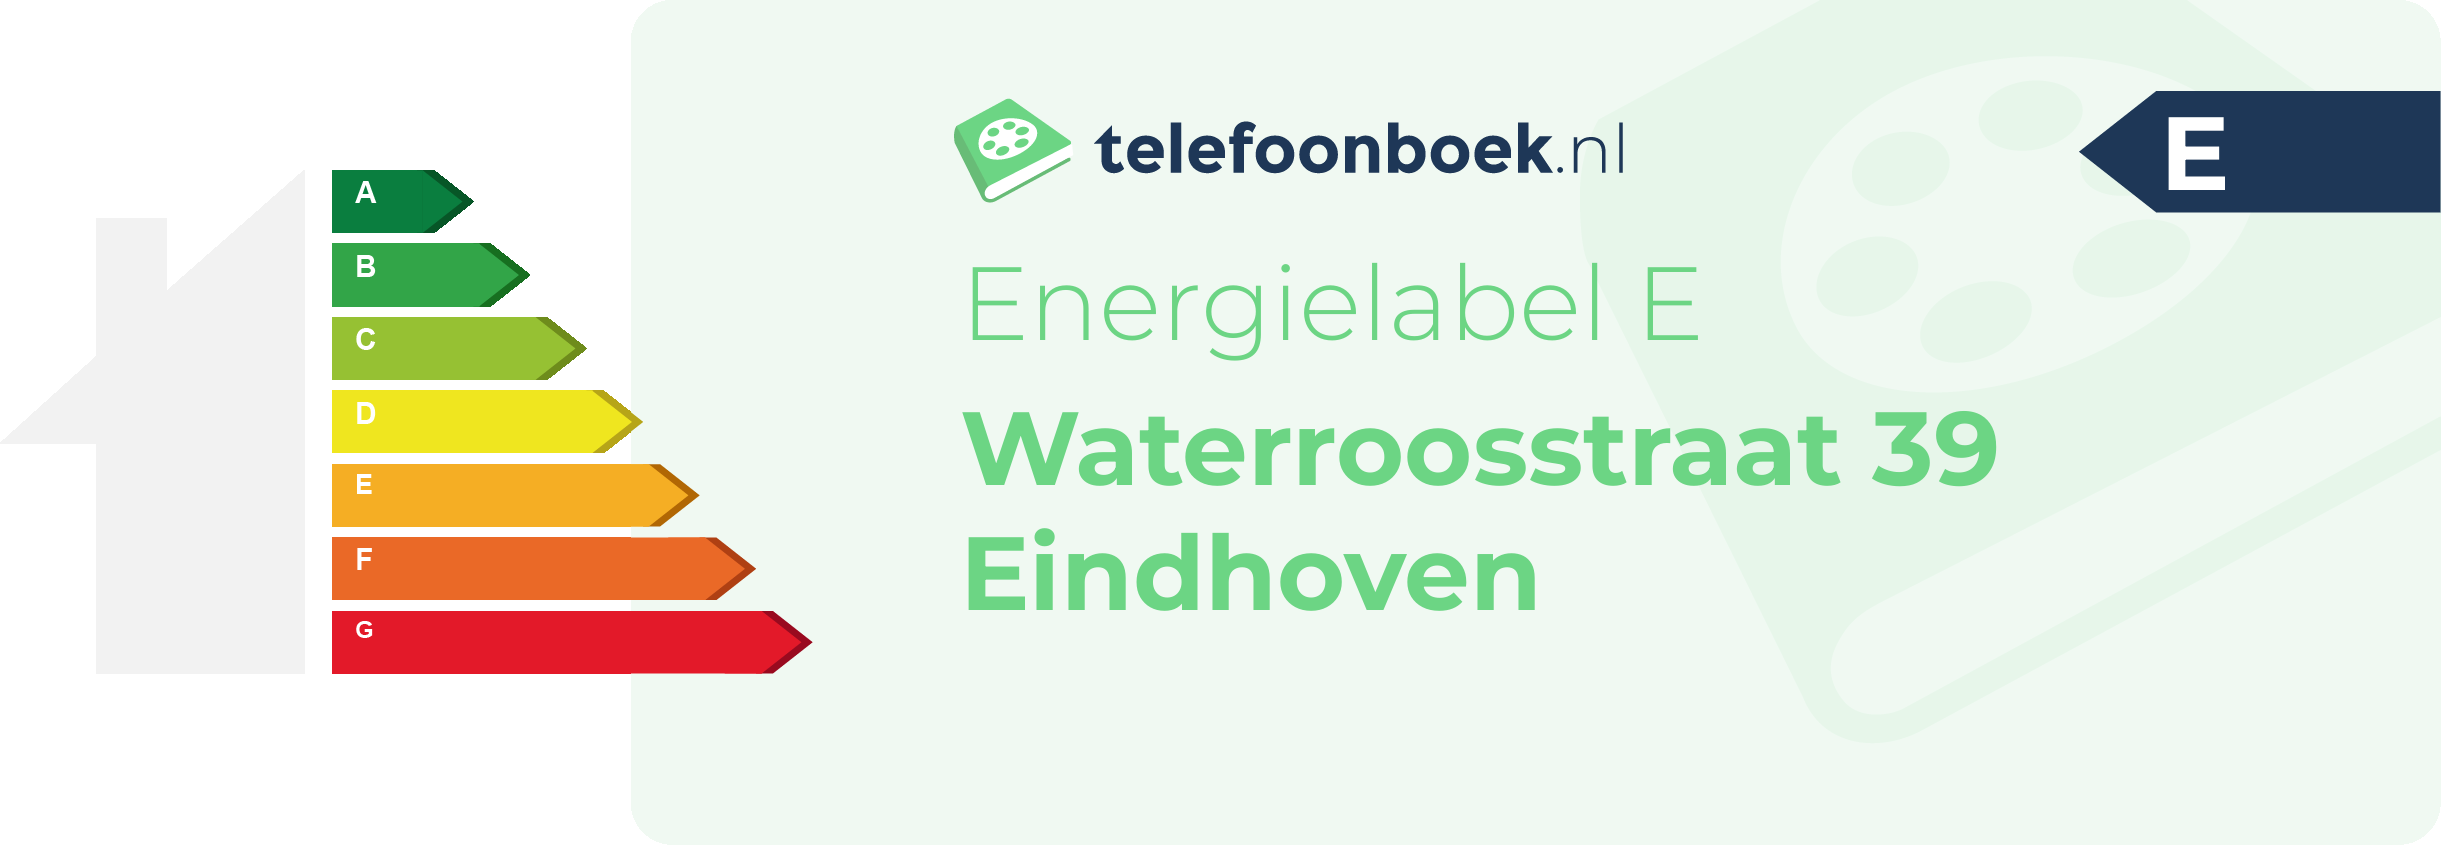 Energielabel Waterroosstraat 39 Eindhoven